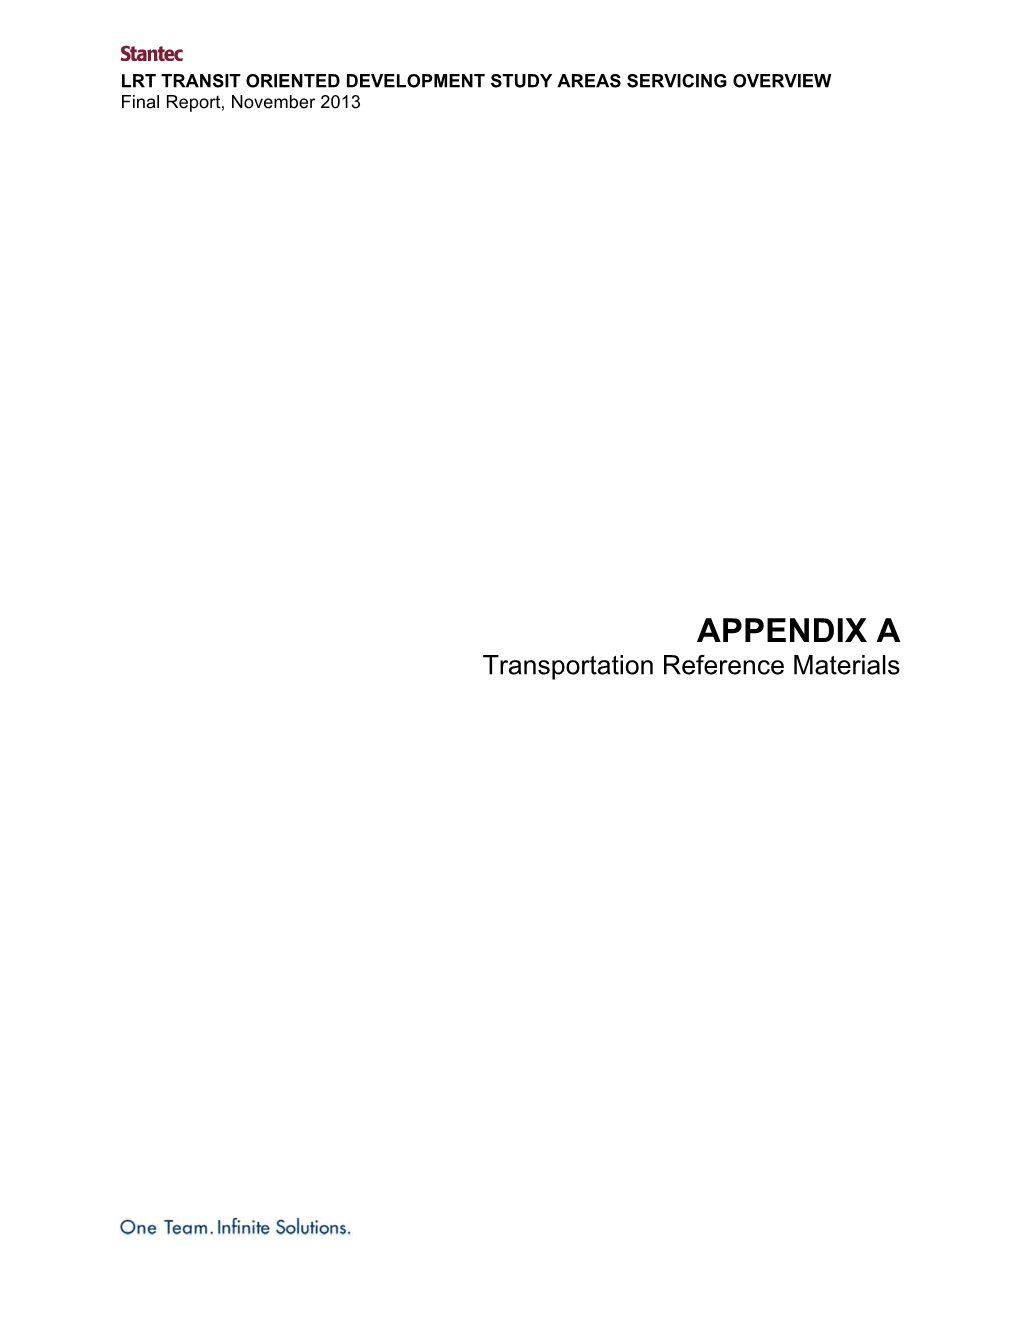 APPENDIX a Transportation Reference Materials